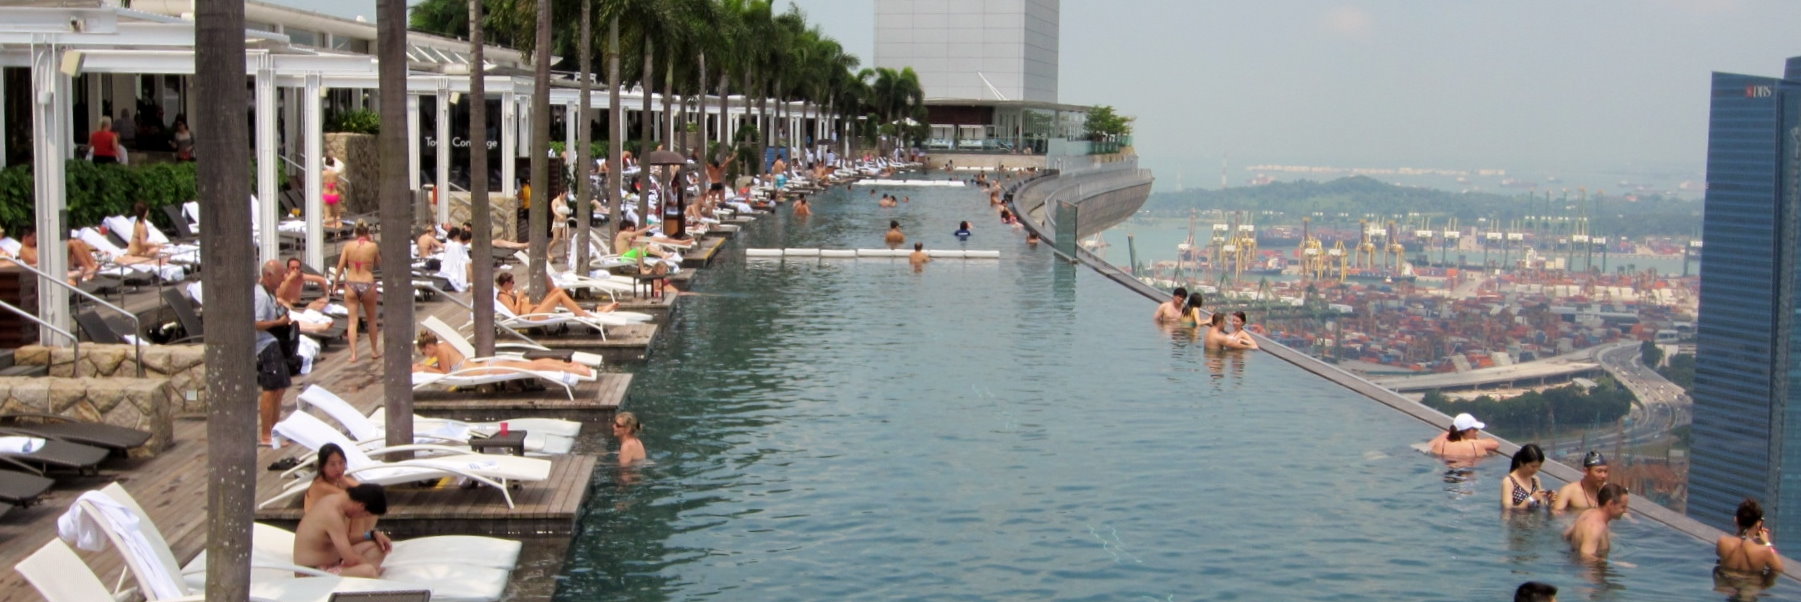 Singapore-Marina-Bay-Sands-Resort